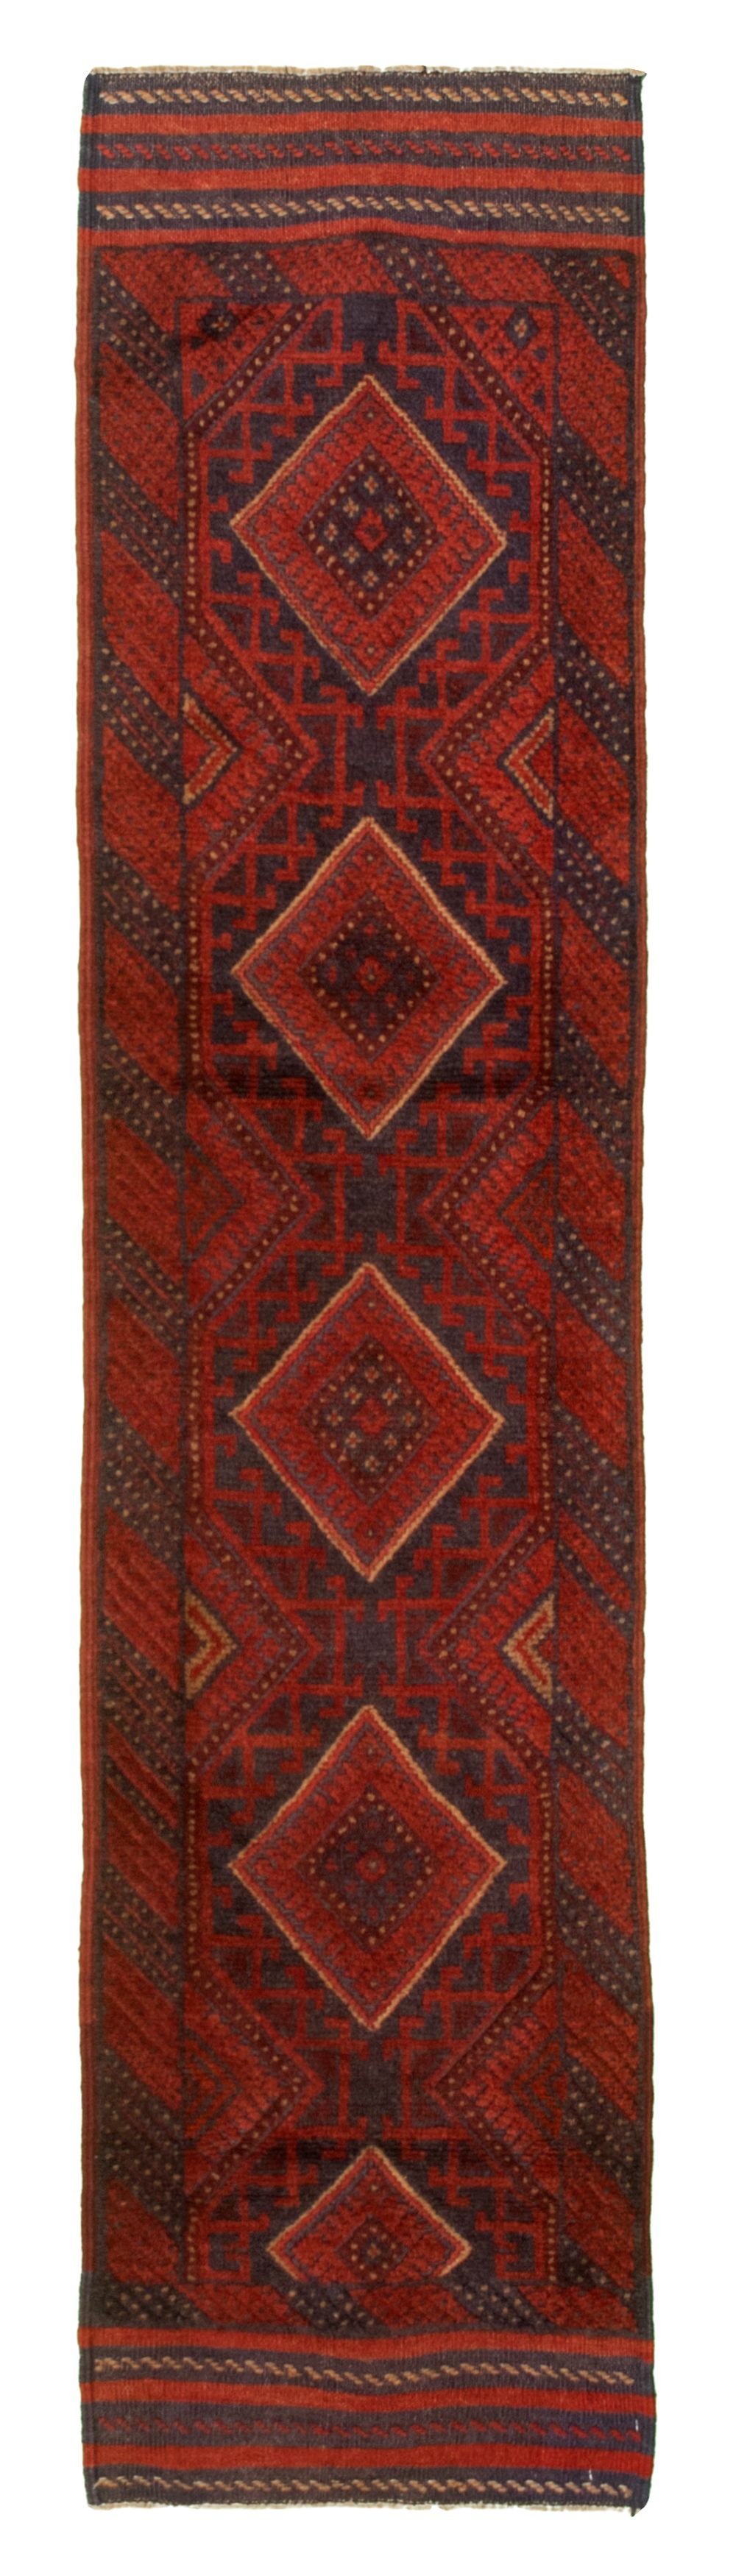 Hand-knotted Tajik Caucasian Red Wool Rug 1'11" x 7'10"  Size: 1'11" x 7'10"  